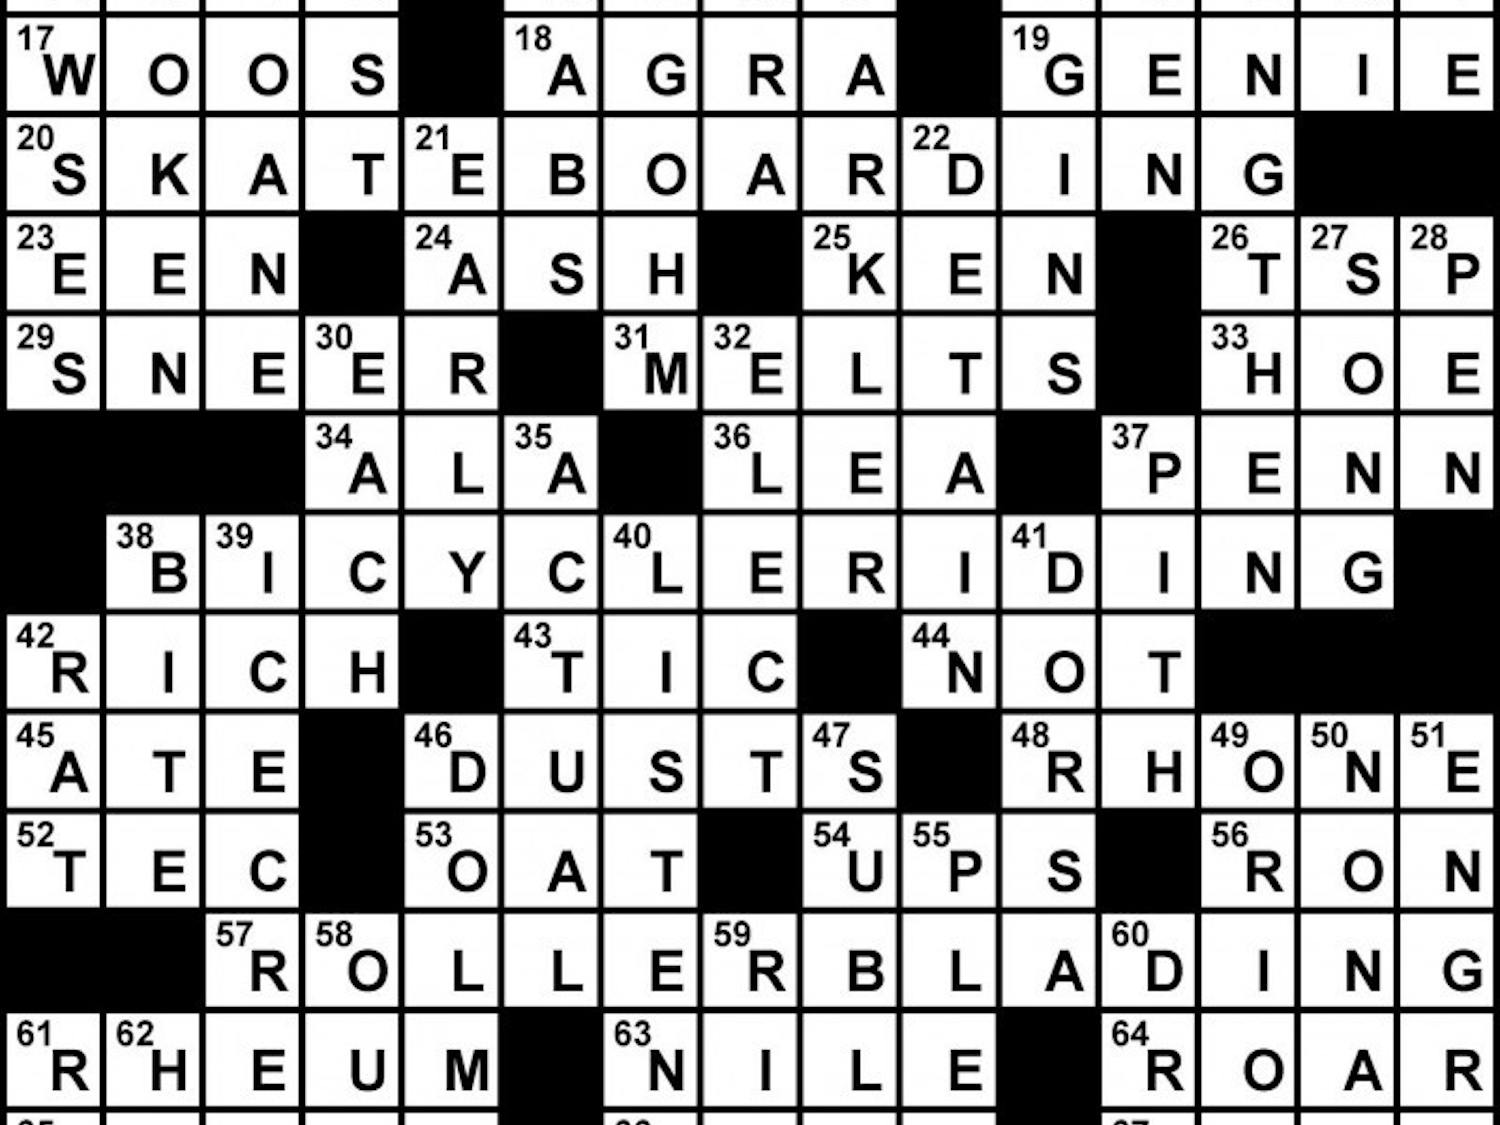 09/28/2011 - Crossword Solution